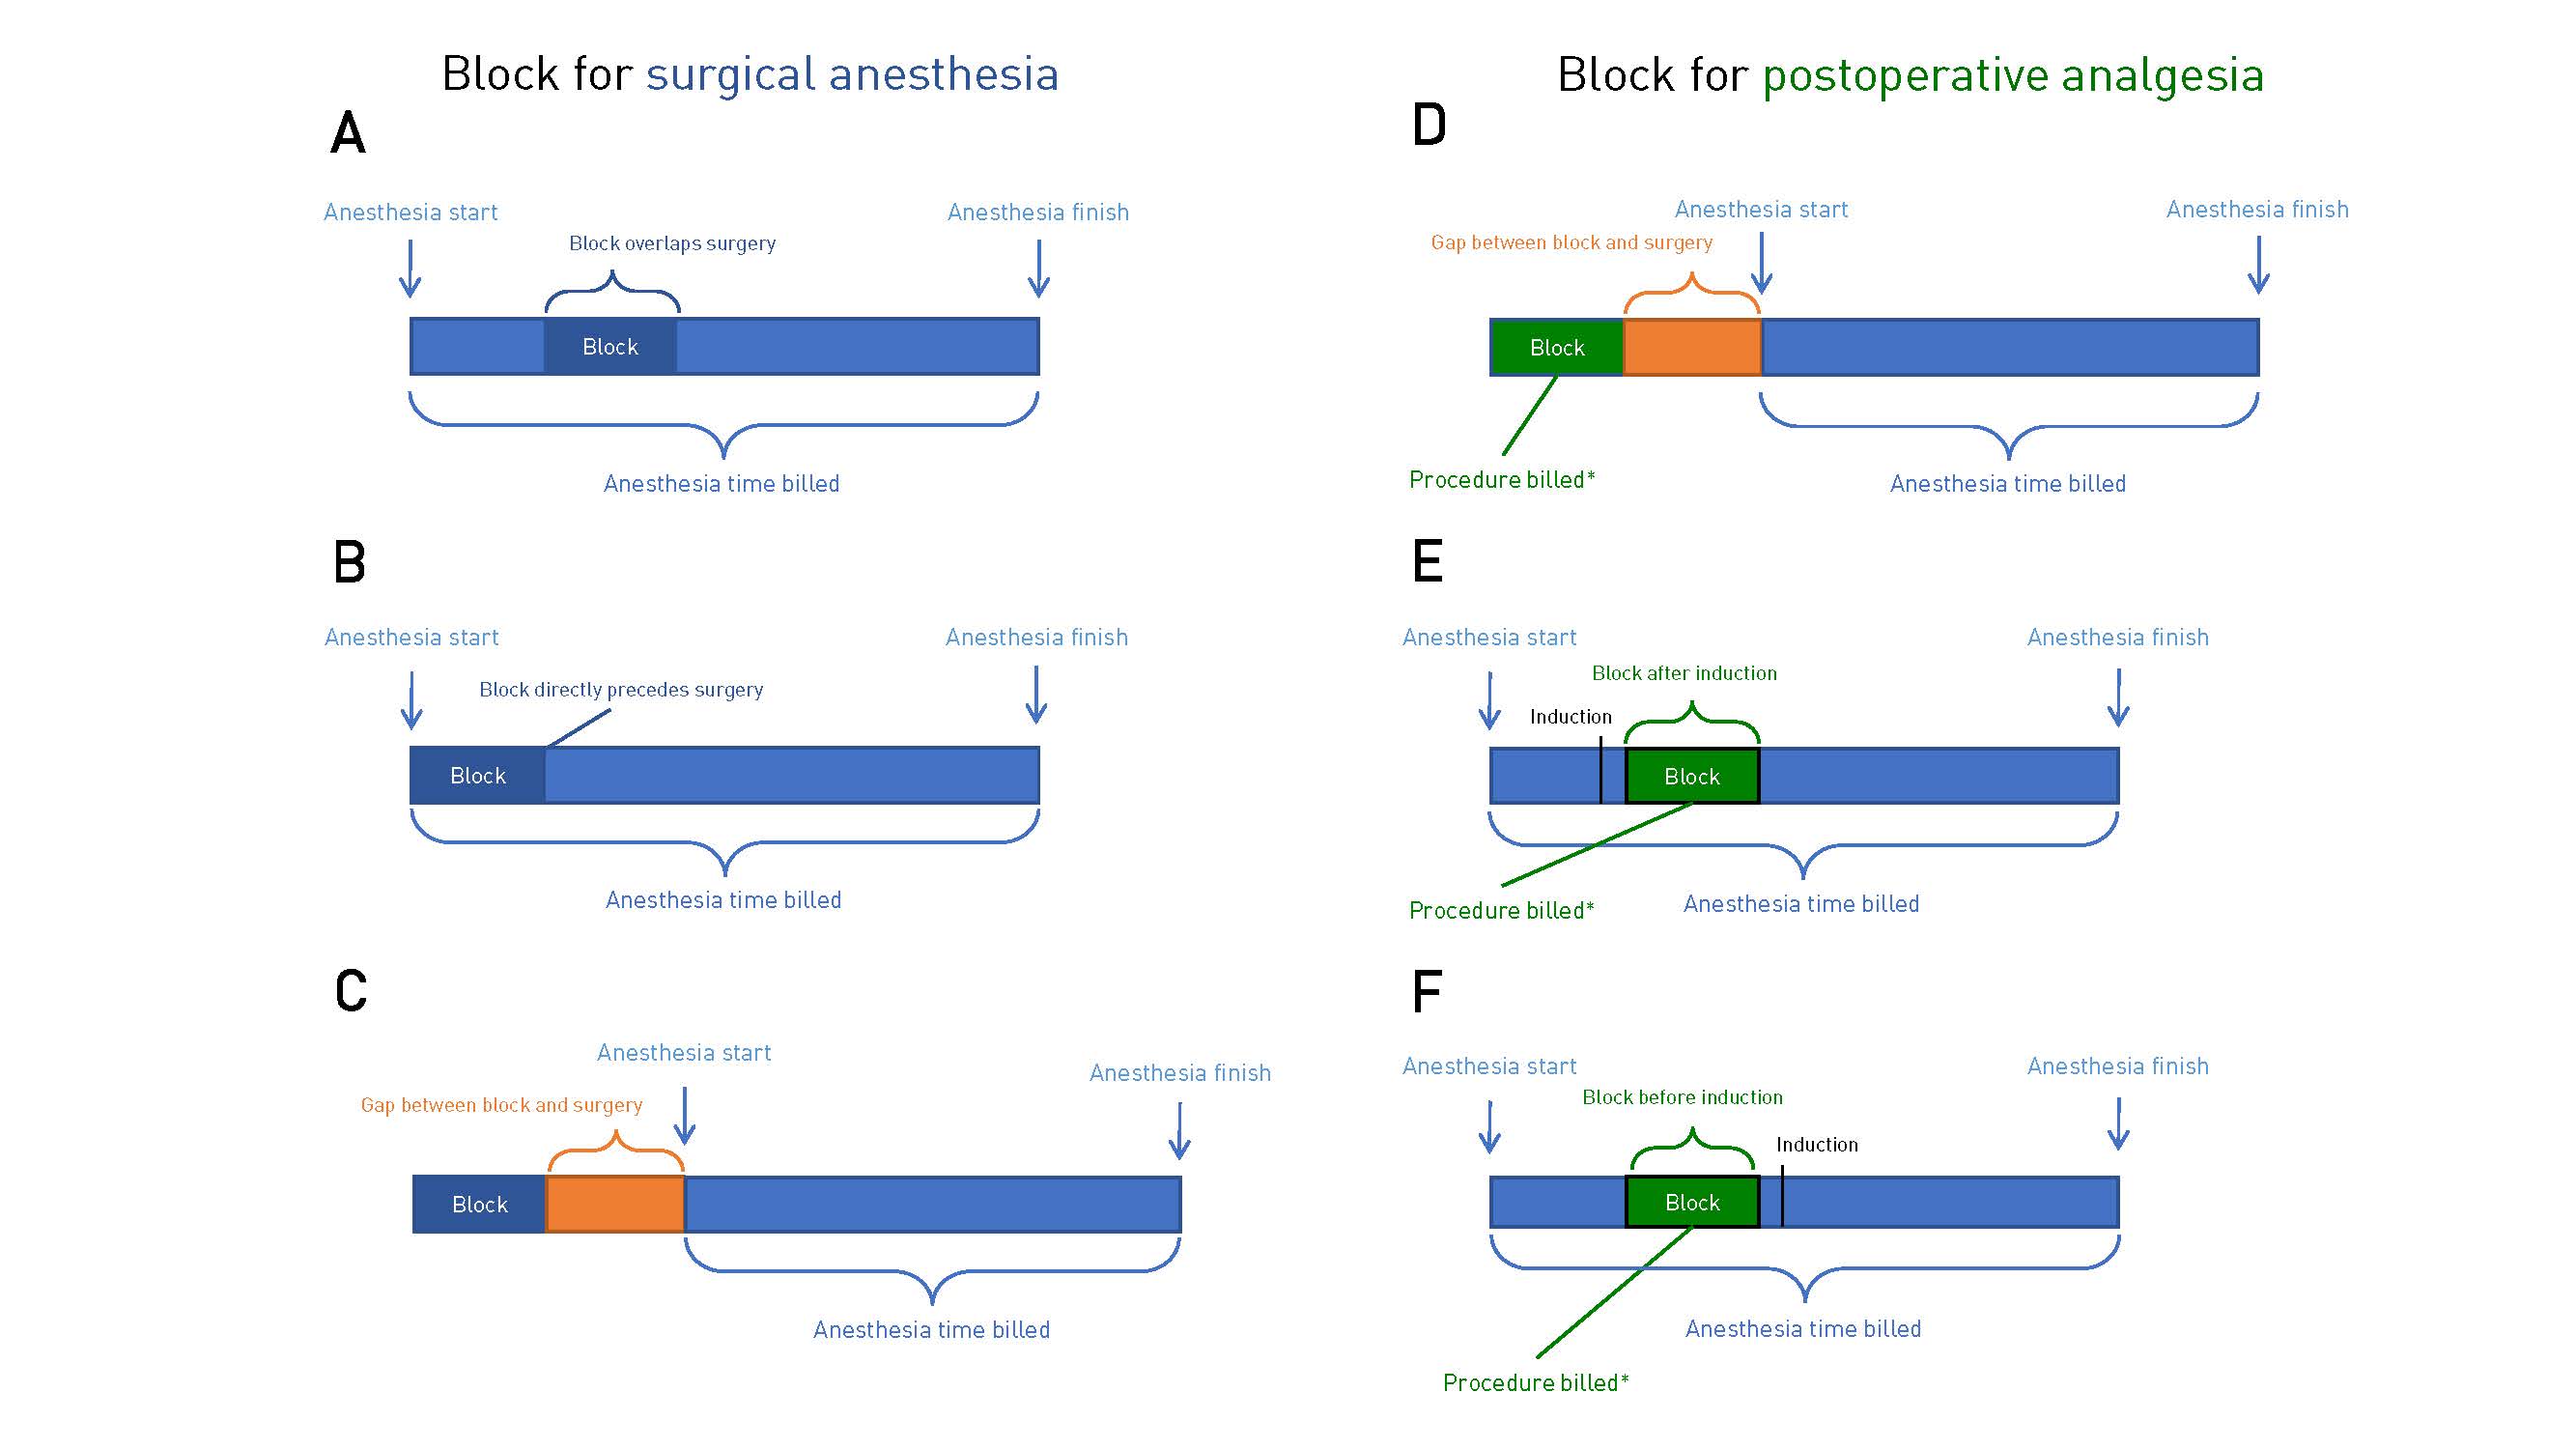 Figure 1. Blocks for surgical anesthesia vs postoperative analgesia